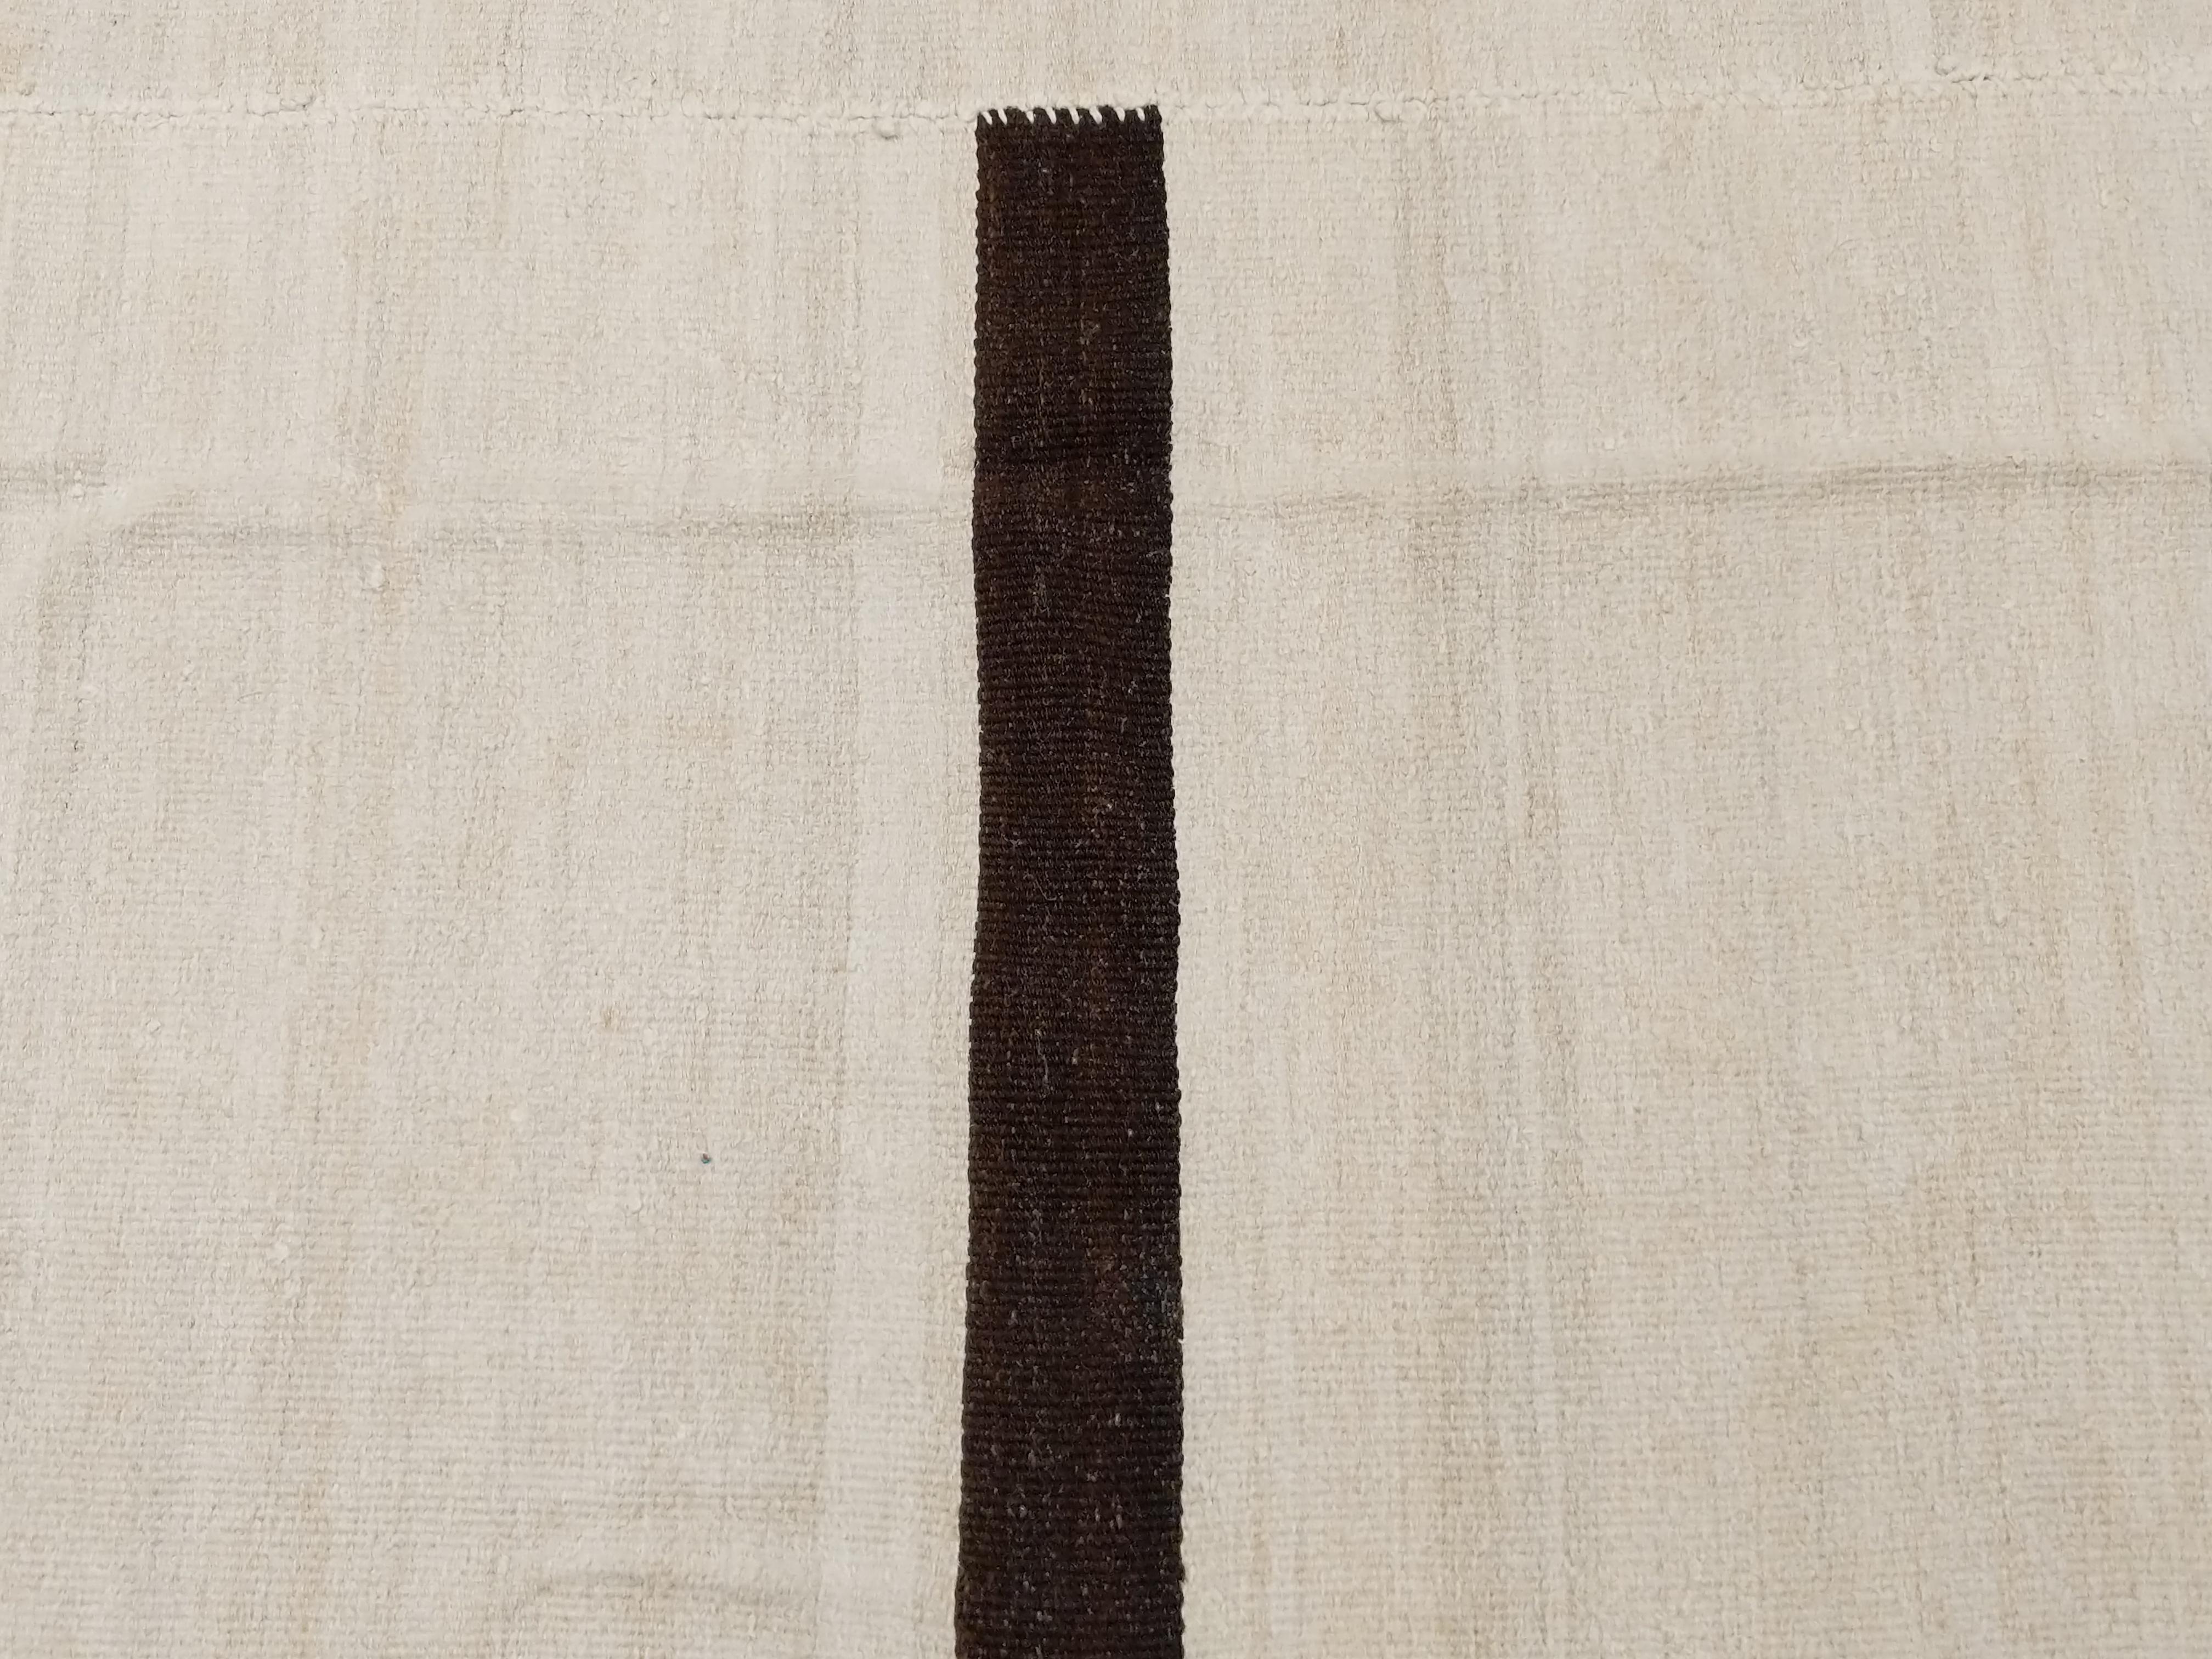 Hand-Woven Contemporary Textural Hemp Minimalist Design Kilim Rug